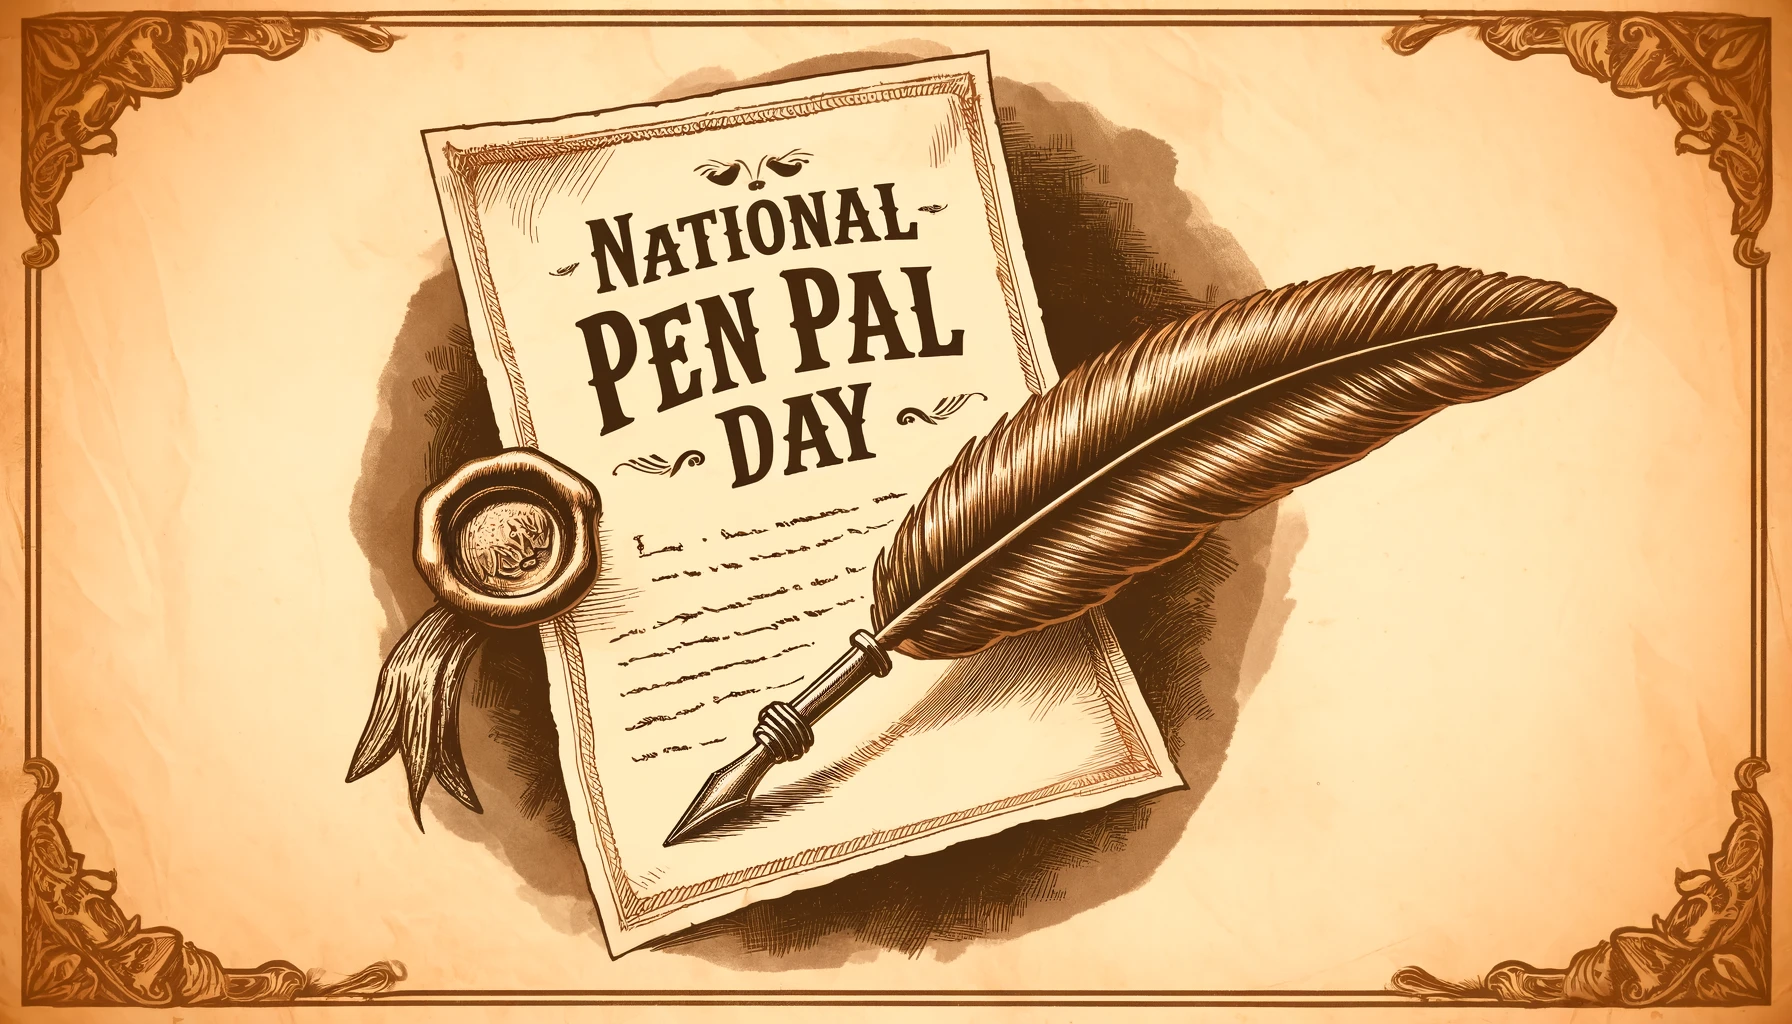 Heartfelt Pen Pal Day Wishes for Long-Distance Friends